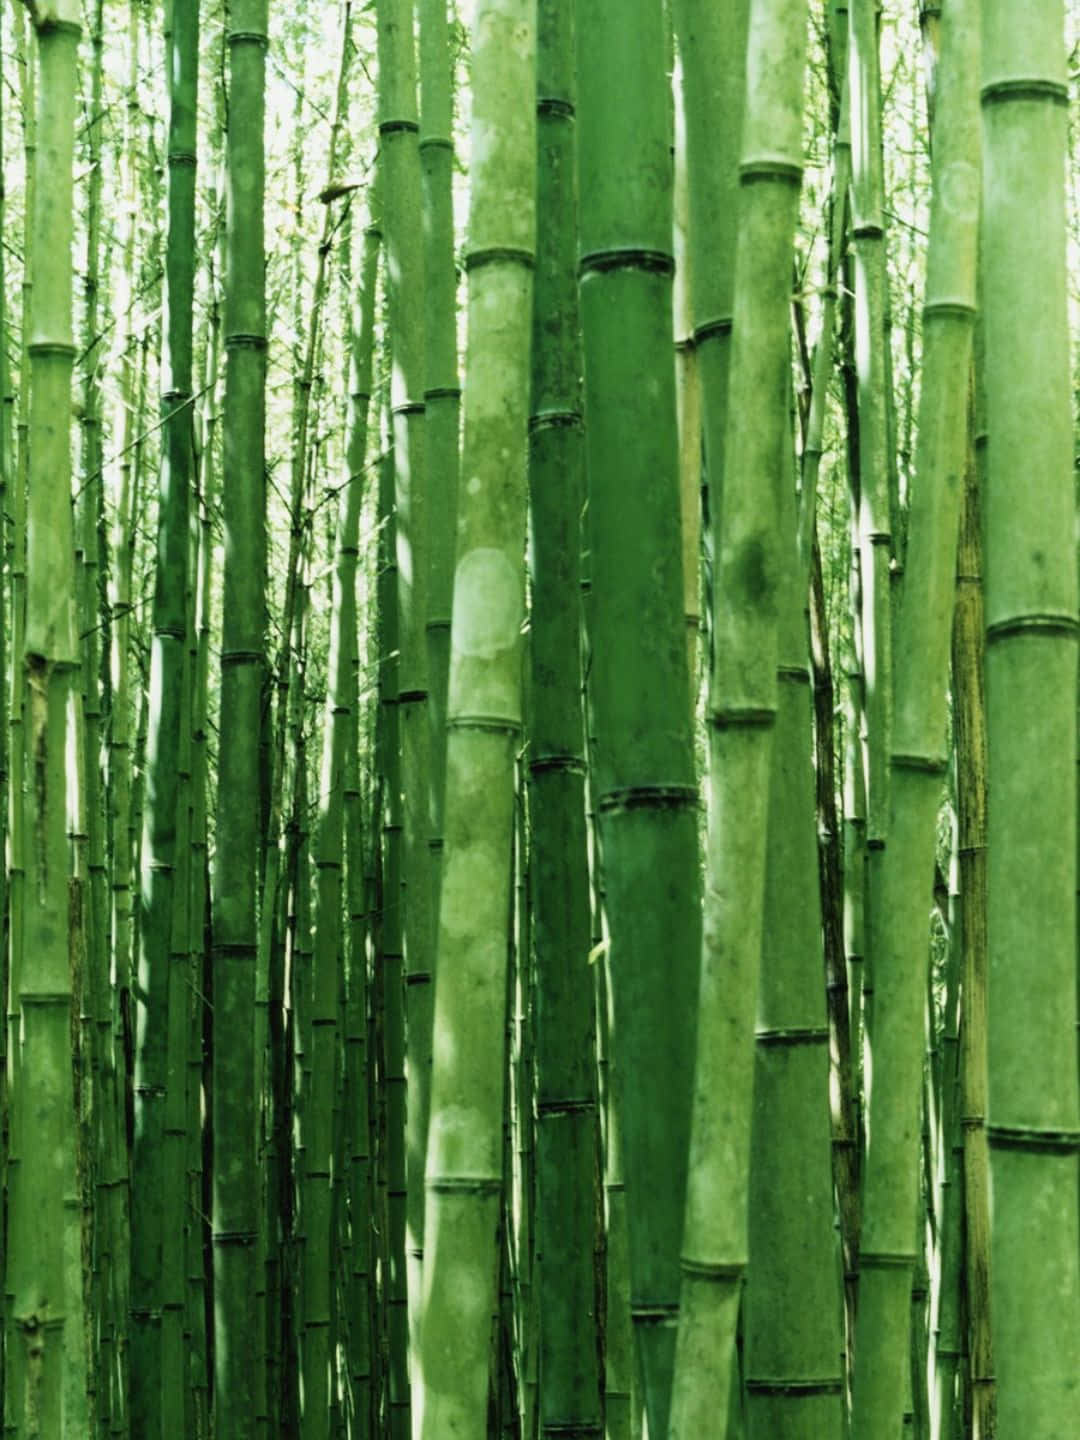 1440p Bamboo Background Spotty Light Green Stems